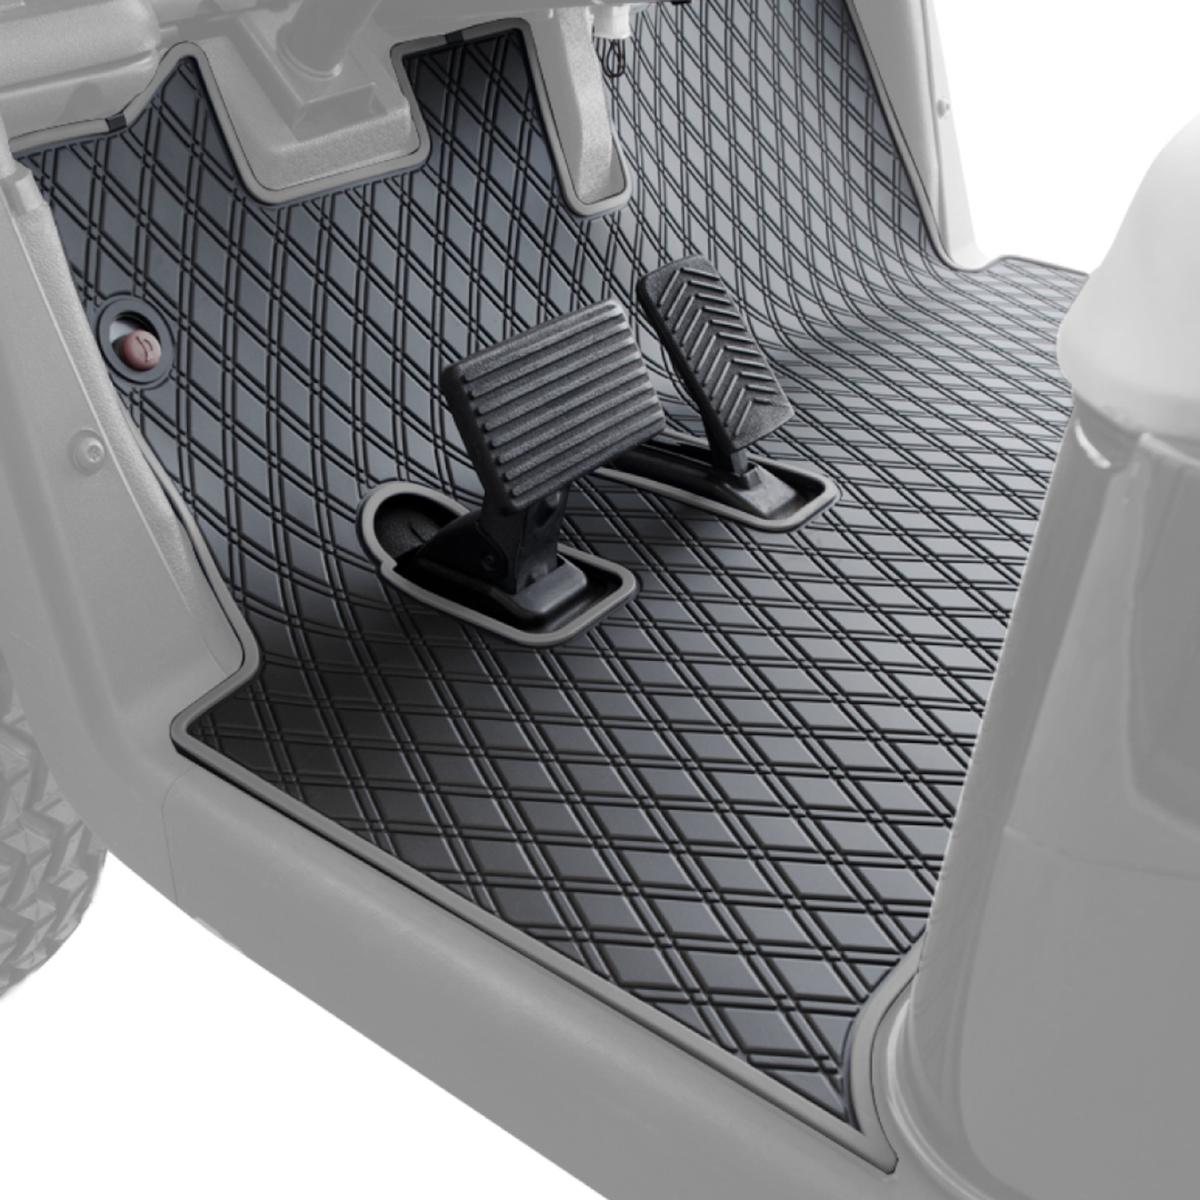 Xtreme Floor Mats for EZGO RXV (08-22) / 2Five (09+) / Western - Black/Grey